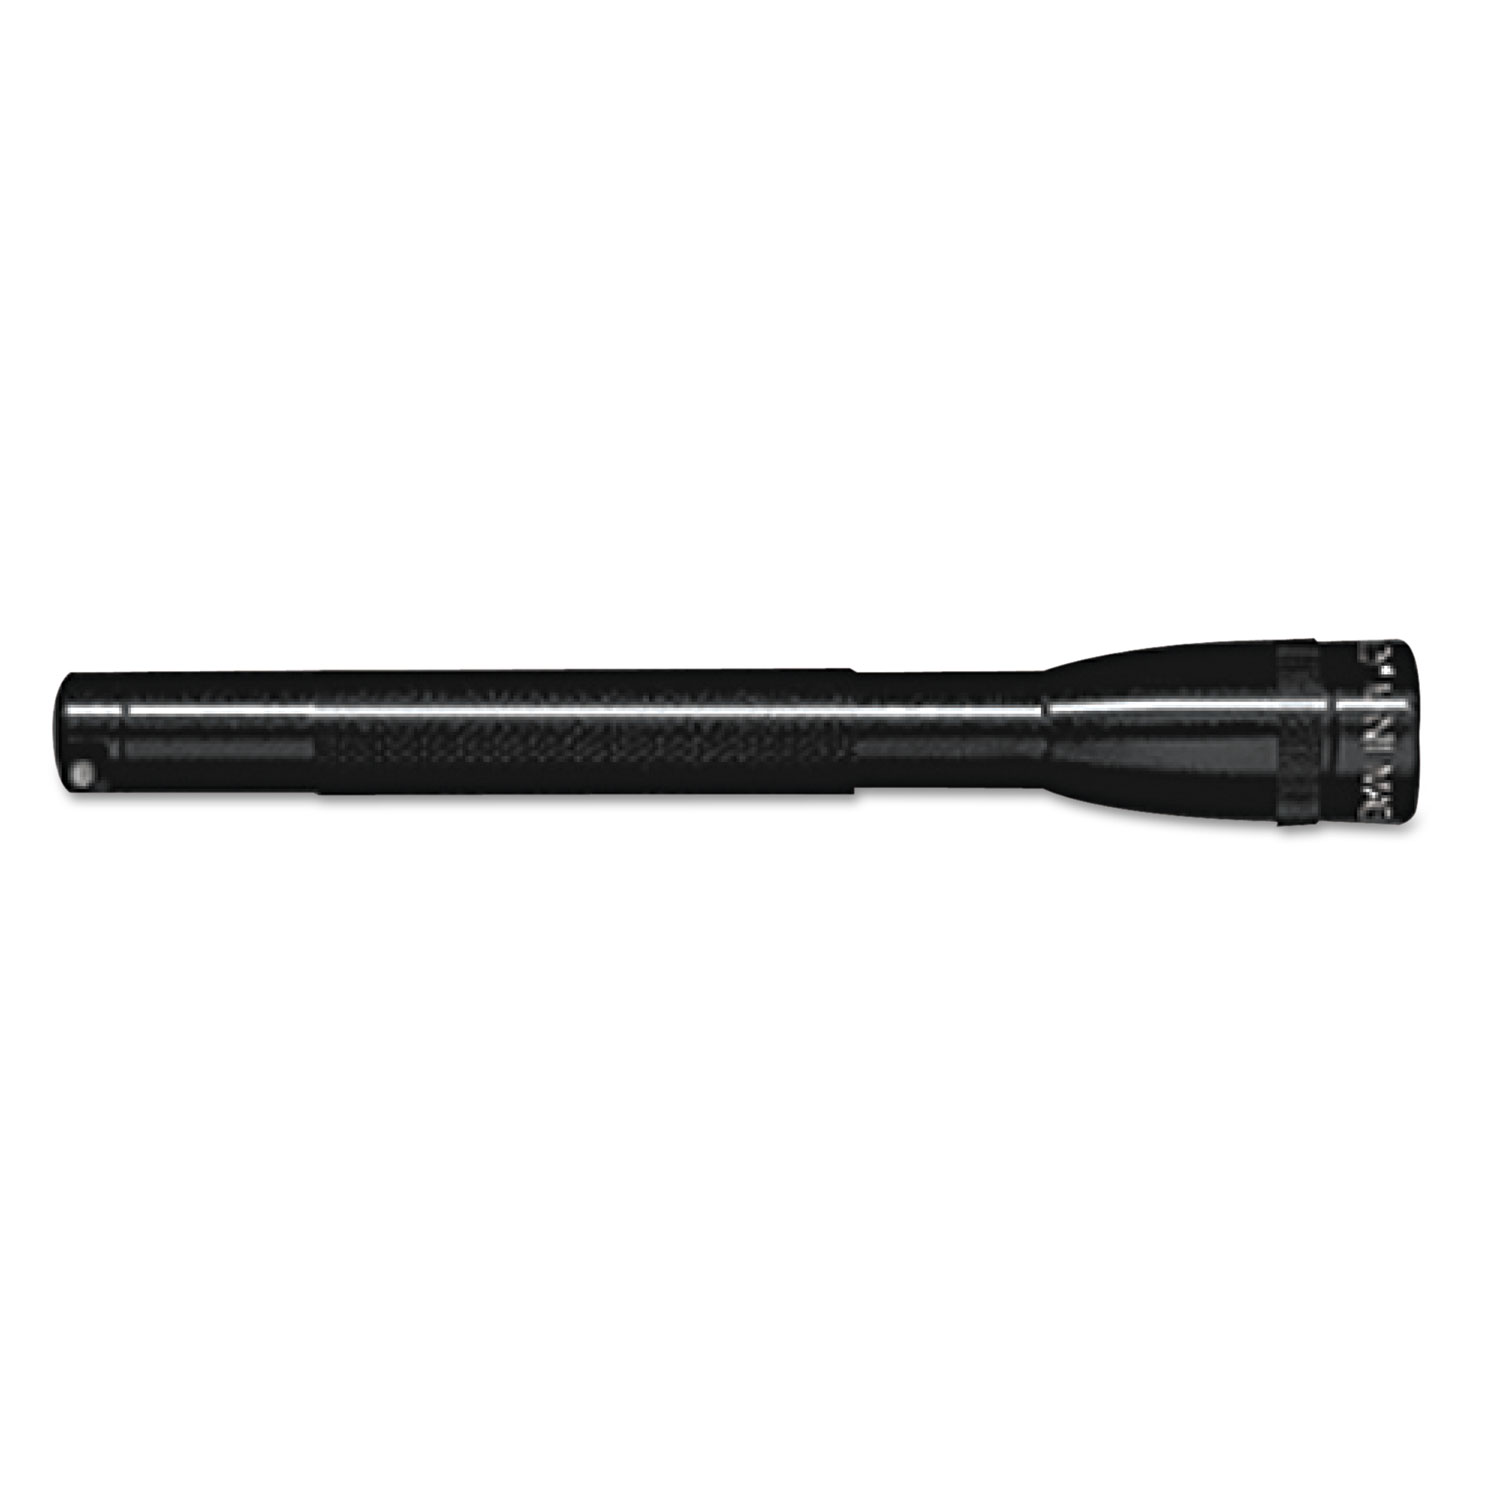  Maglite M3A016 Mini AAA Flashlight, 2 AAA Batteries (Included), Black (MGLM3A016) 